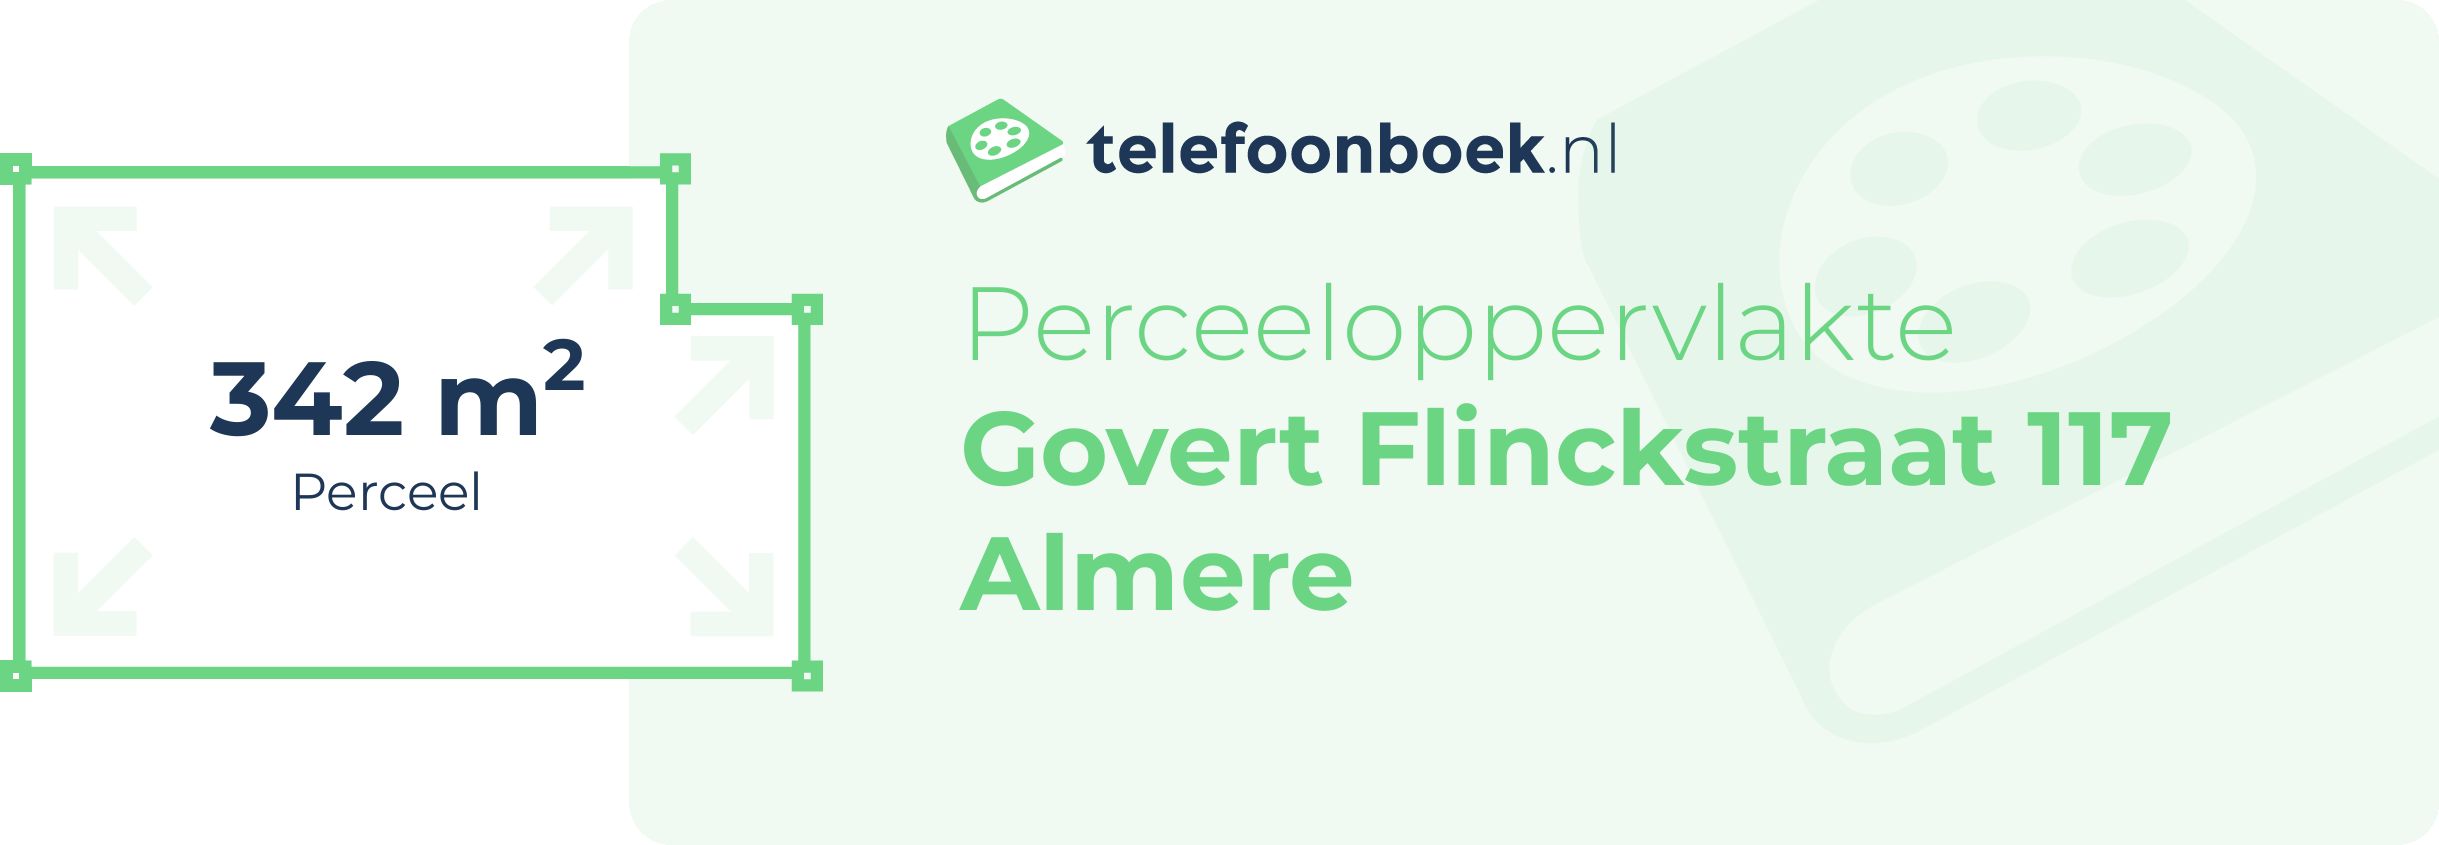 Perceeloppervlakte Govert Flinckstraat 117 Almere